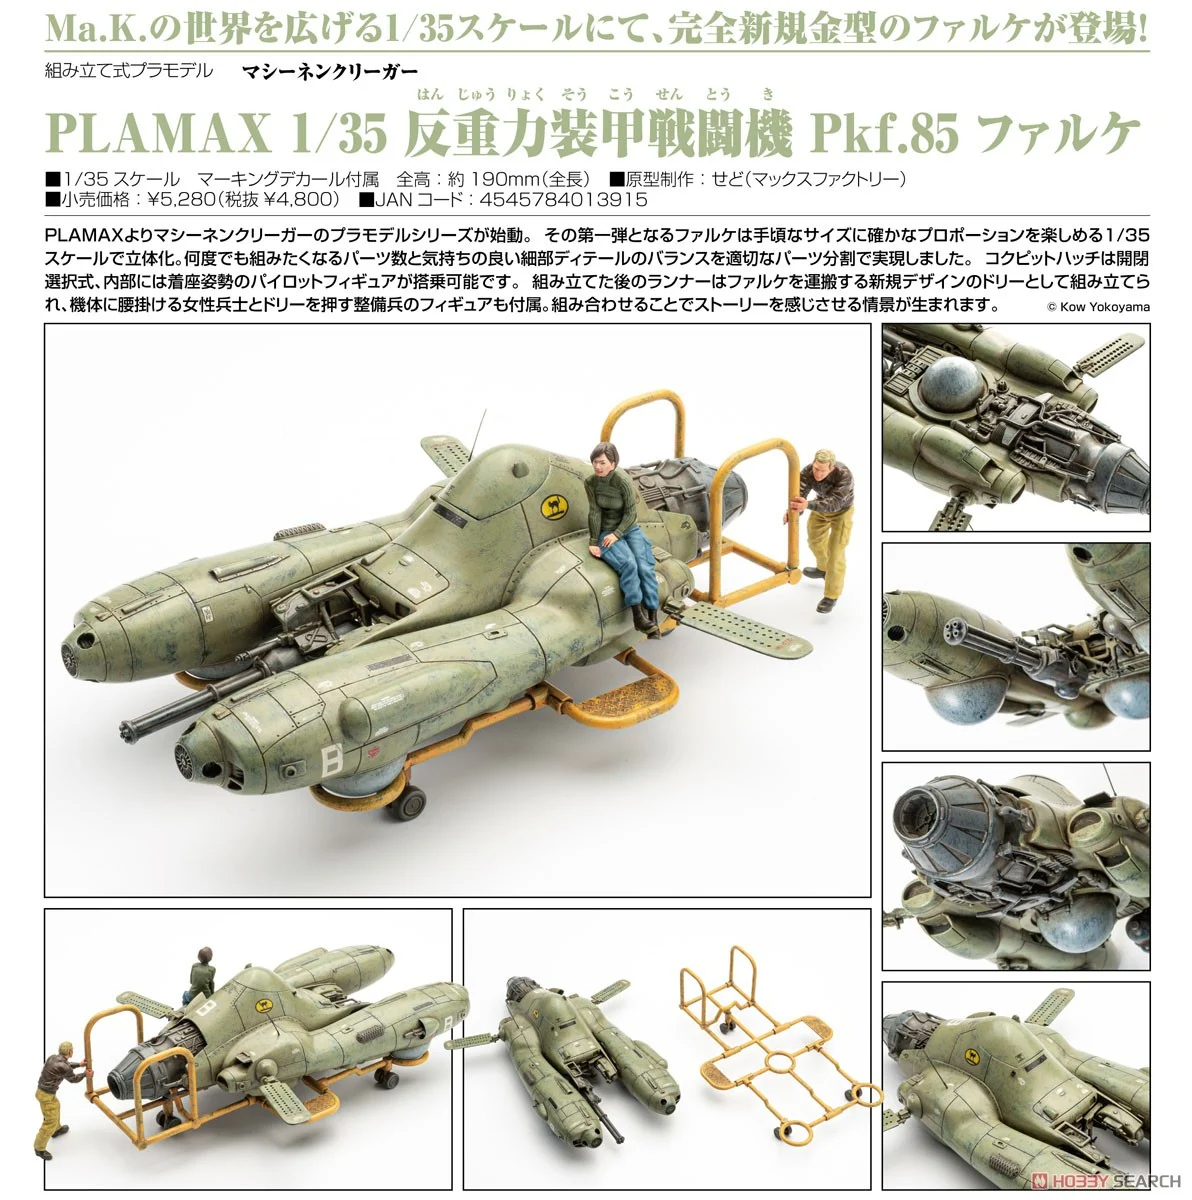 PLAMAX『反重力装甲戦闘機 Pkf.85 ファルケ』マシーネンクリーガー 1/35 プラモデル-009